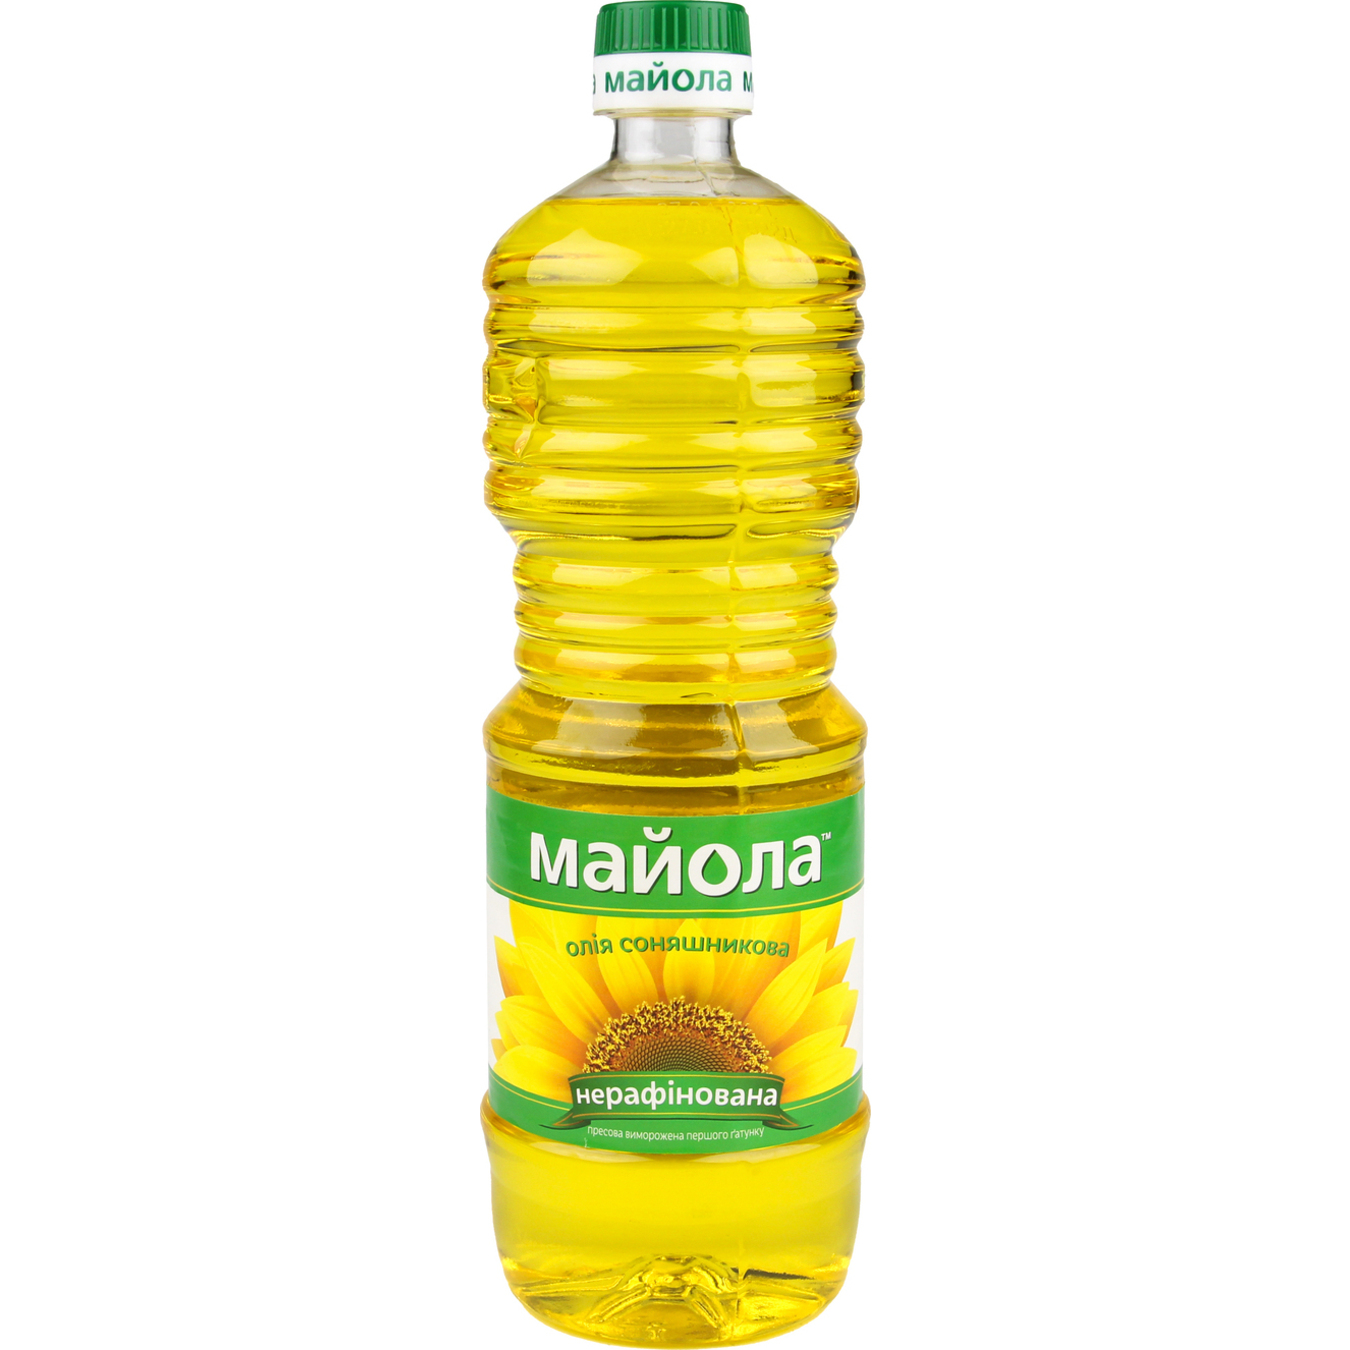 Mayola Unrefined First Grade Sunflower Oil 850ml